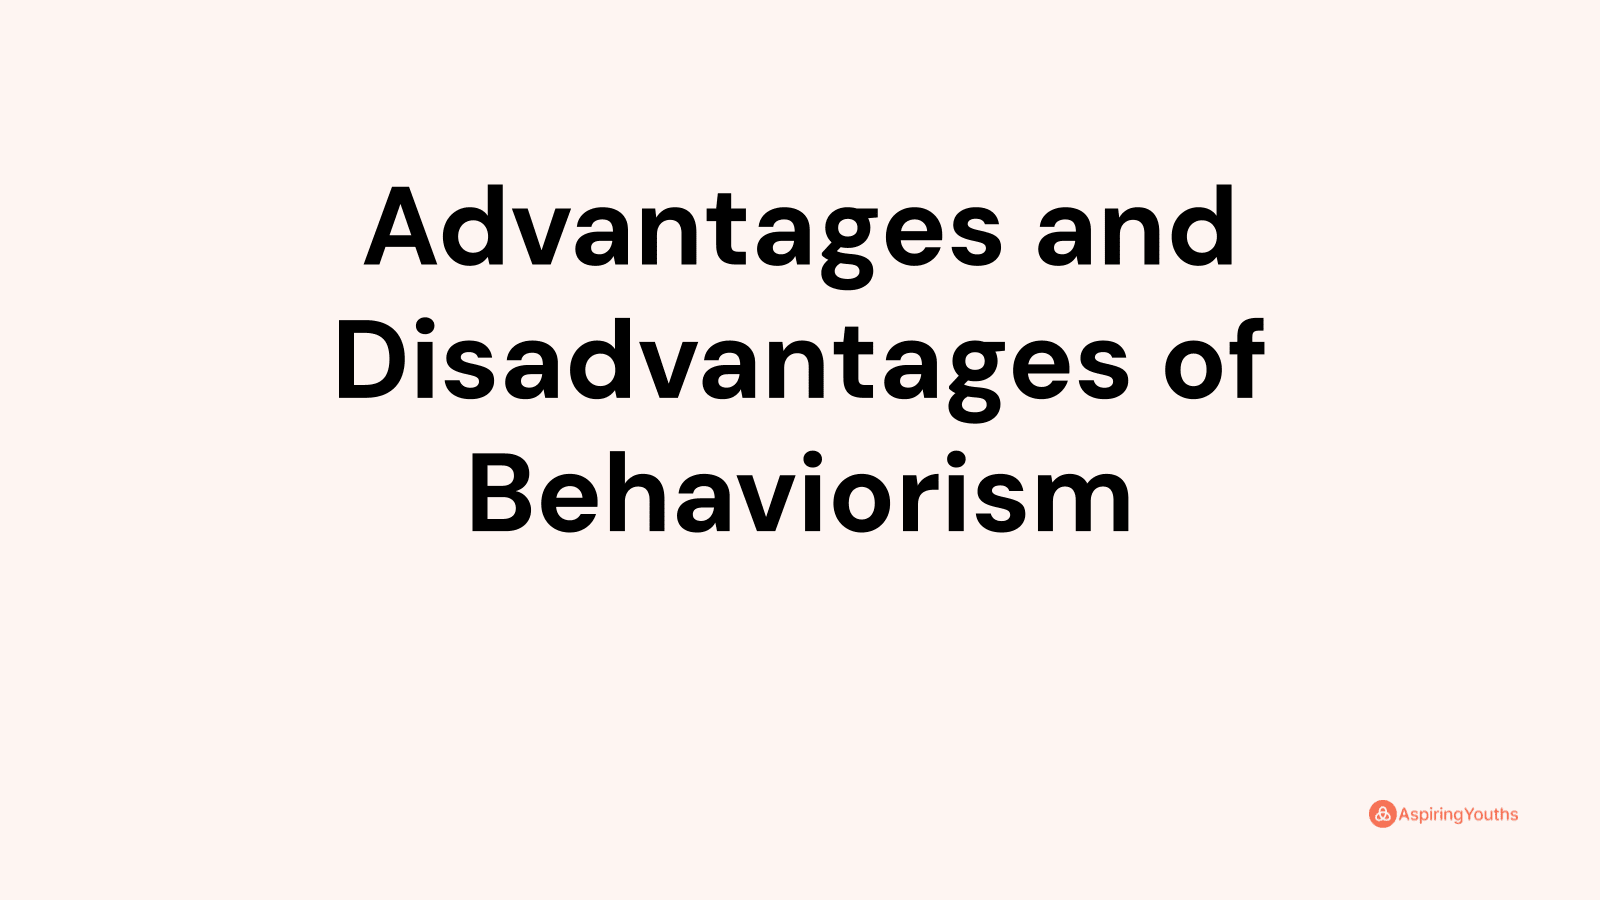 Advantages and disadvantages of Behaviorism